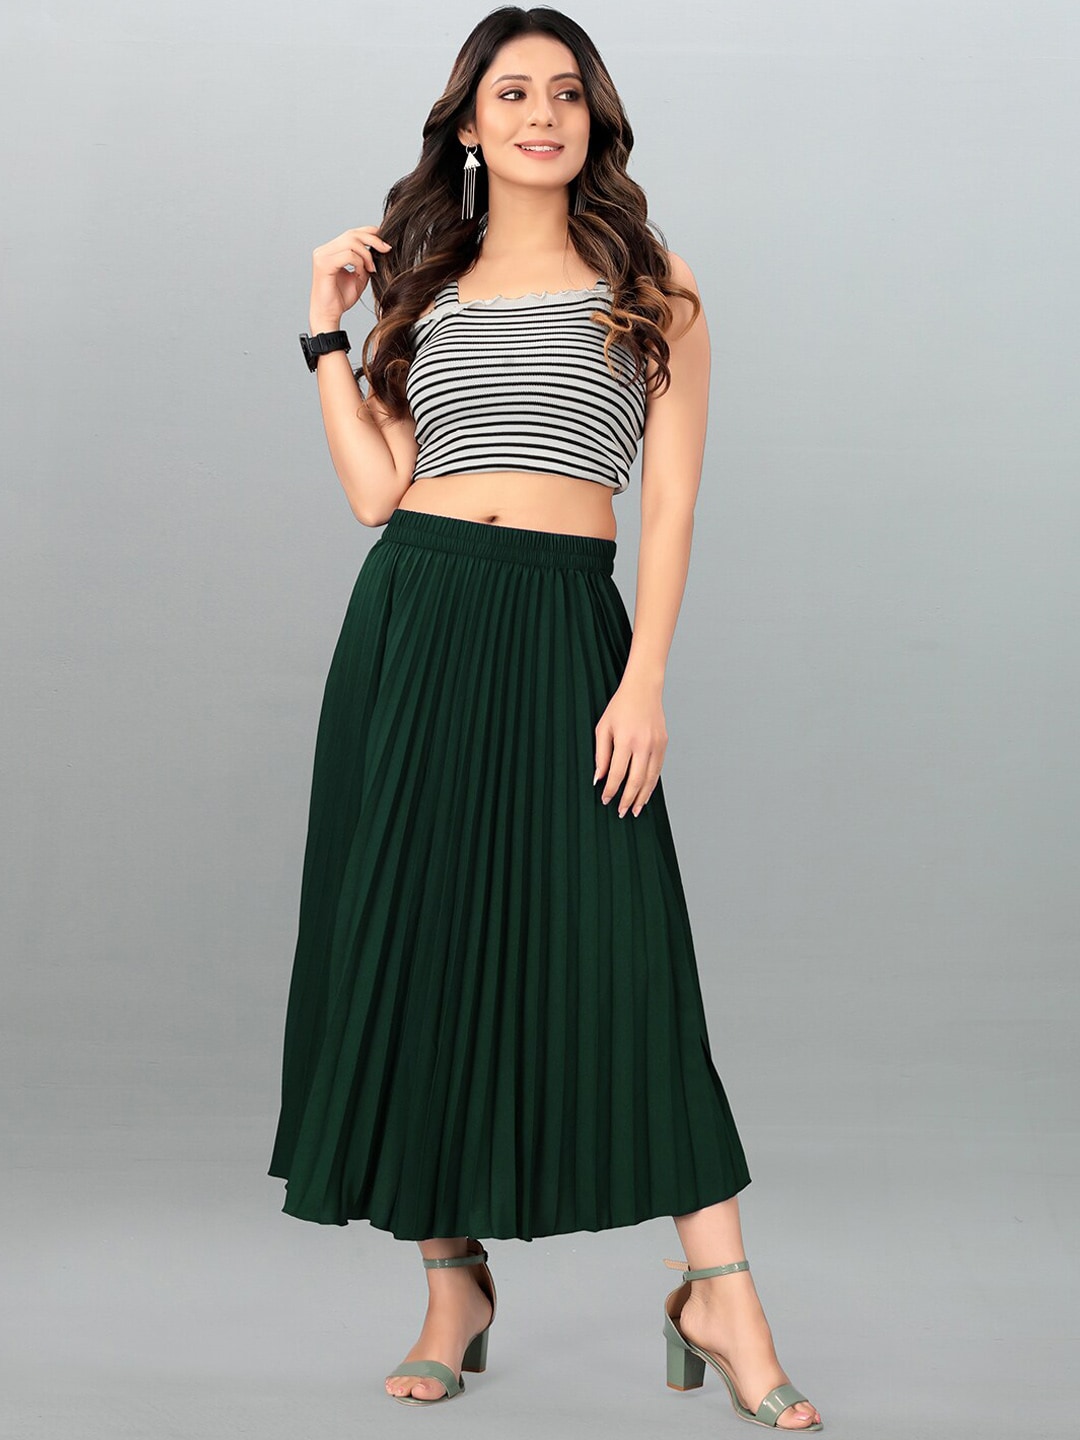 DEKLOOK Pleated A-Line Midi Skirt Price in India